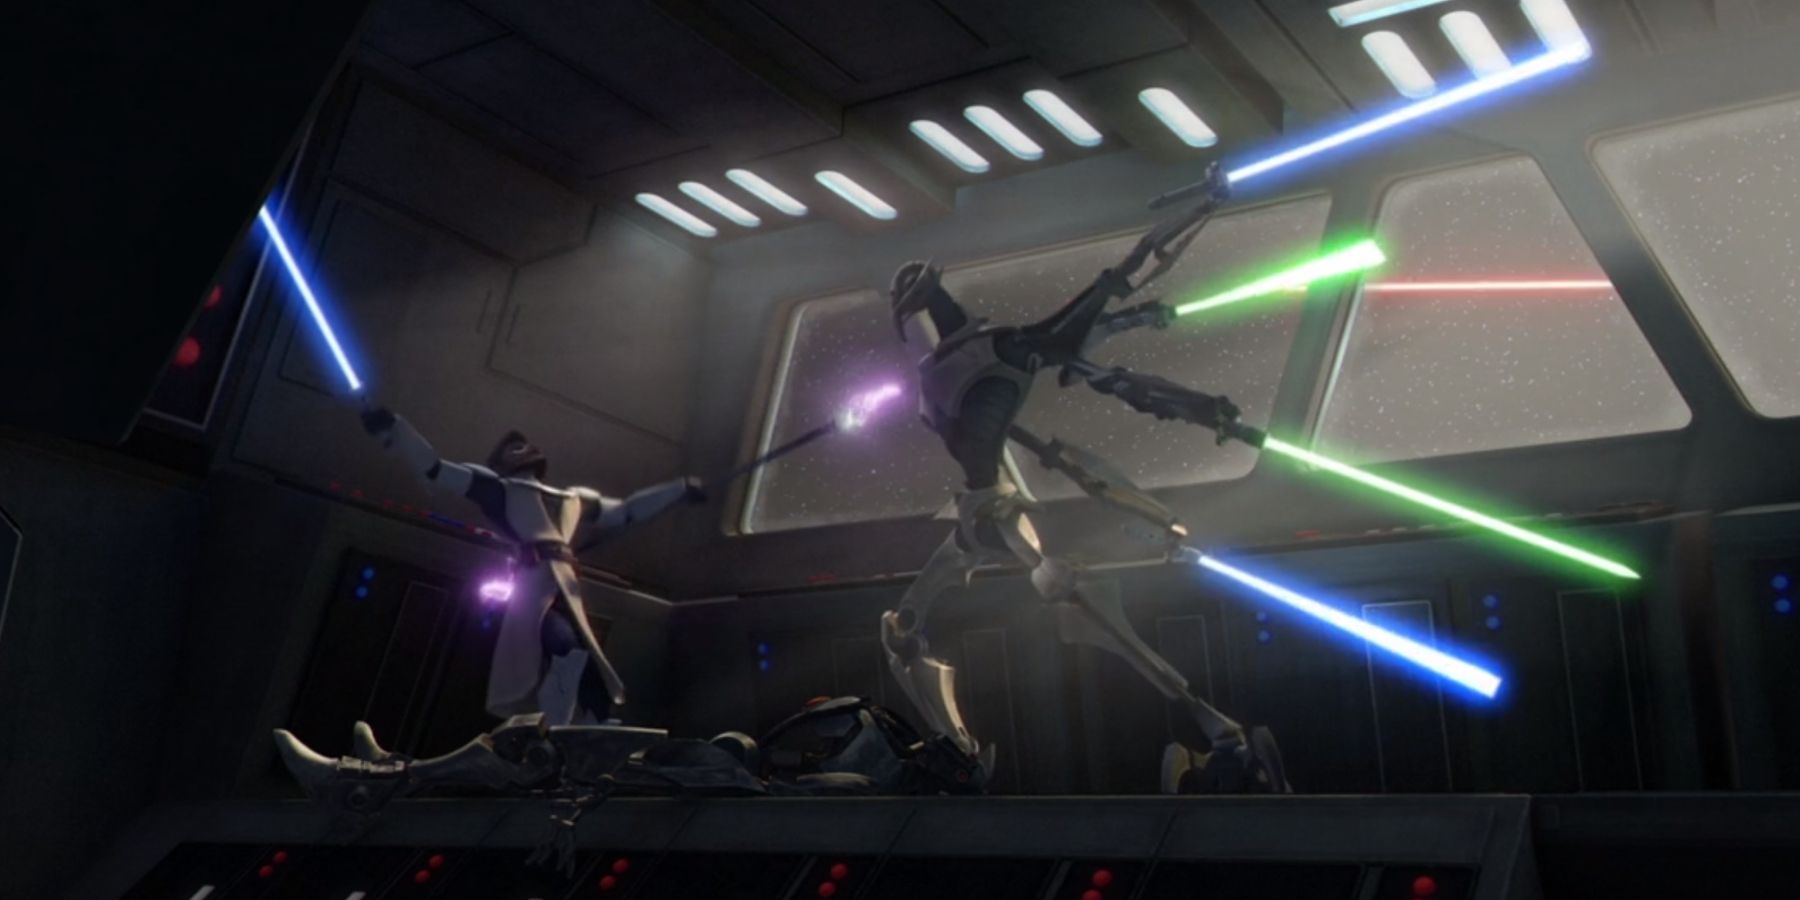 Obi-Wan Kenobi battling General Grievous on a ship in Star Wars The Clone Wars